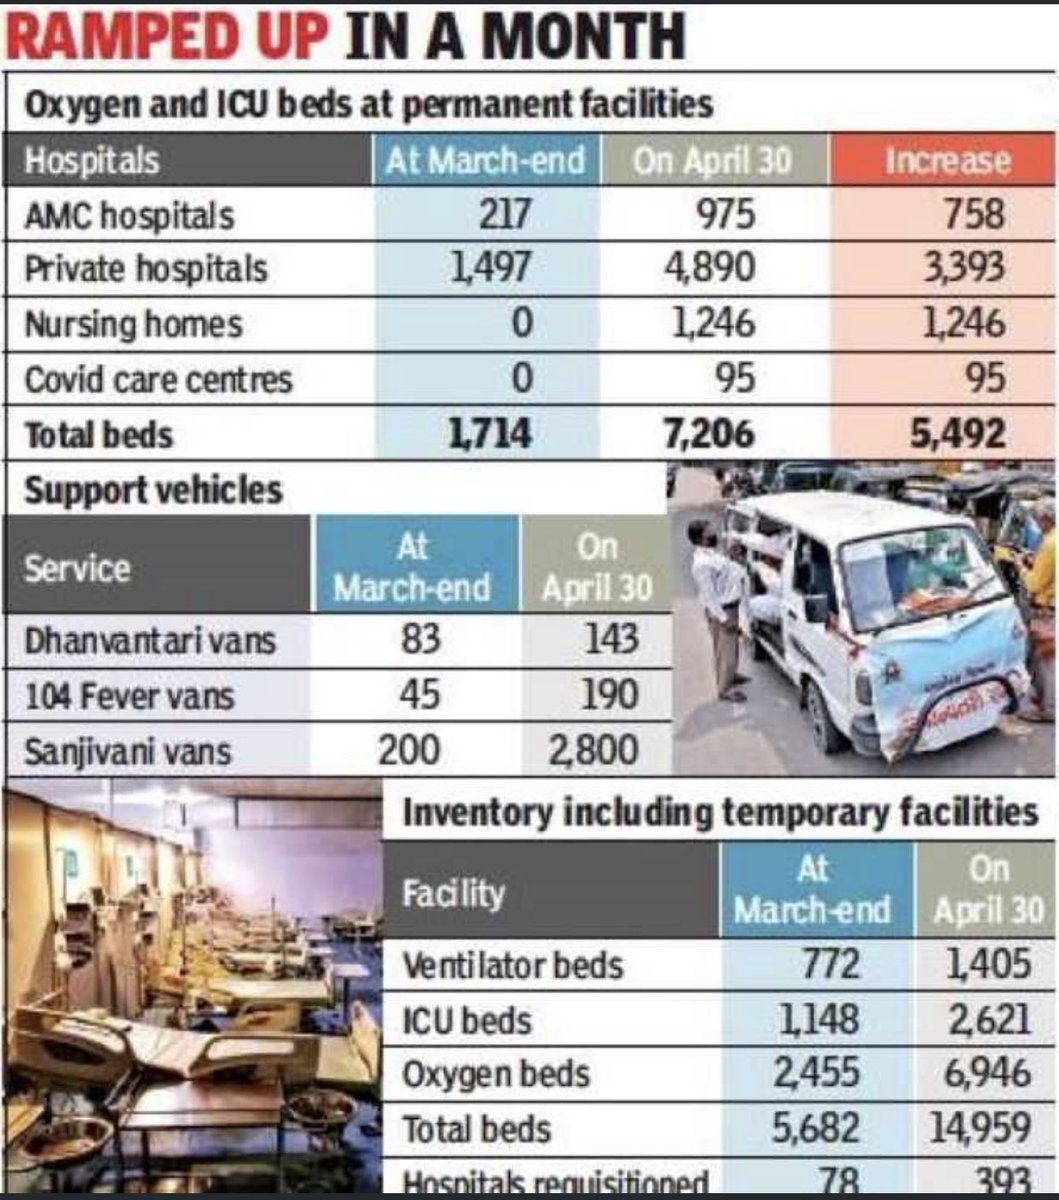 RT @Mukeshias: Ahmedabad Municipal Corporation added 5,500 oxygen beds in 30 days

https://t.co/4Csl4jQikG https://t.co/jG2JfXTQsm